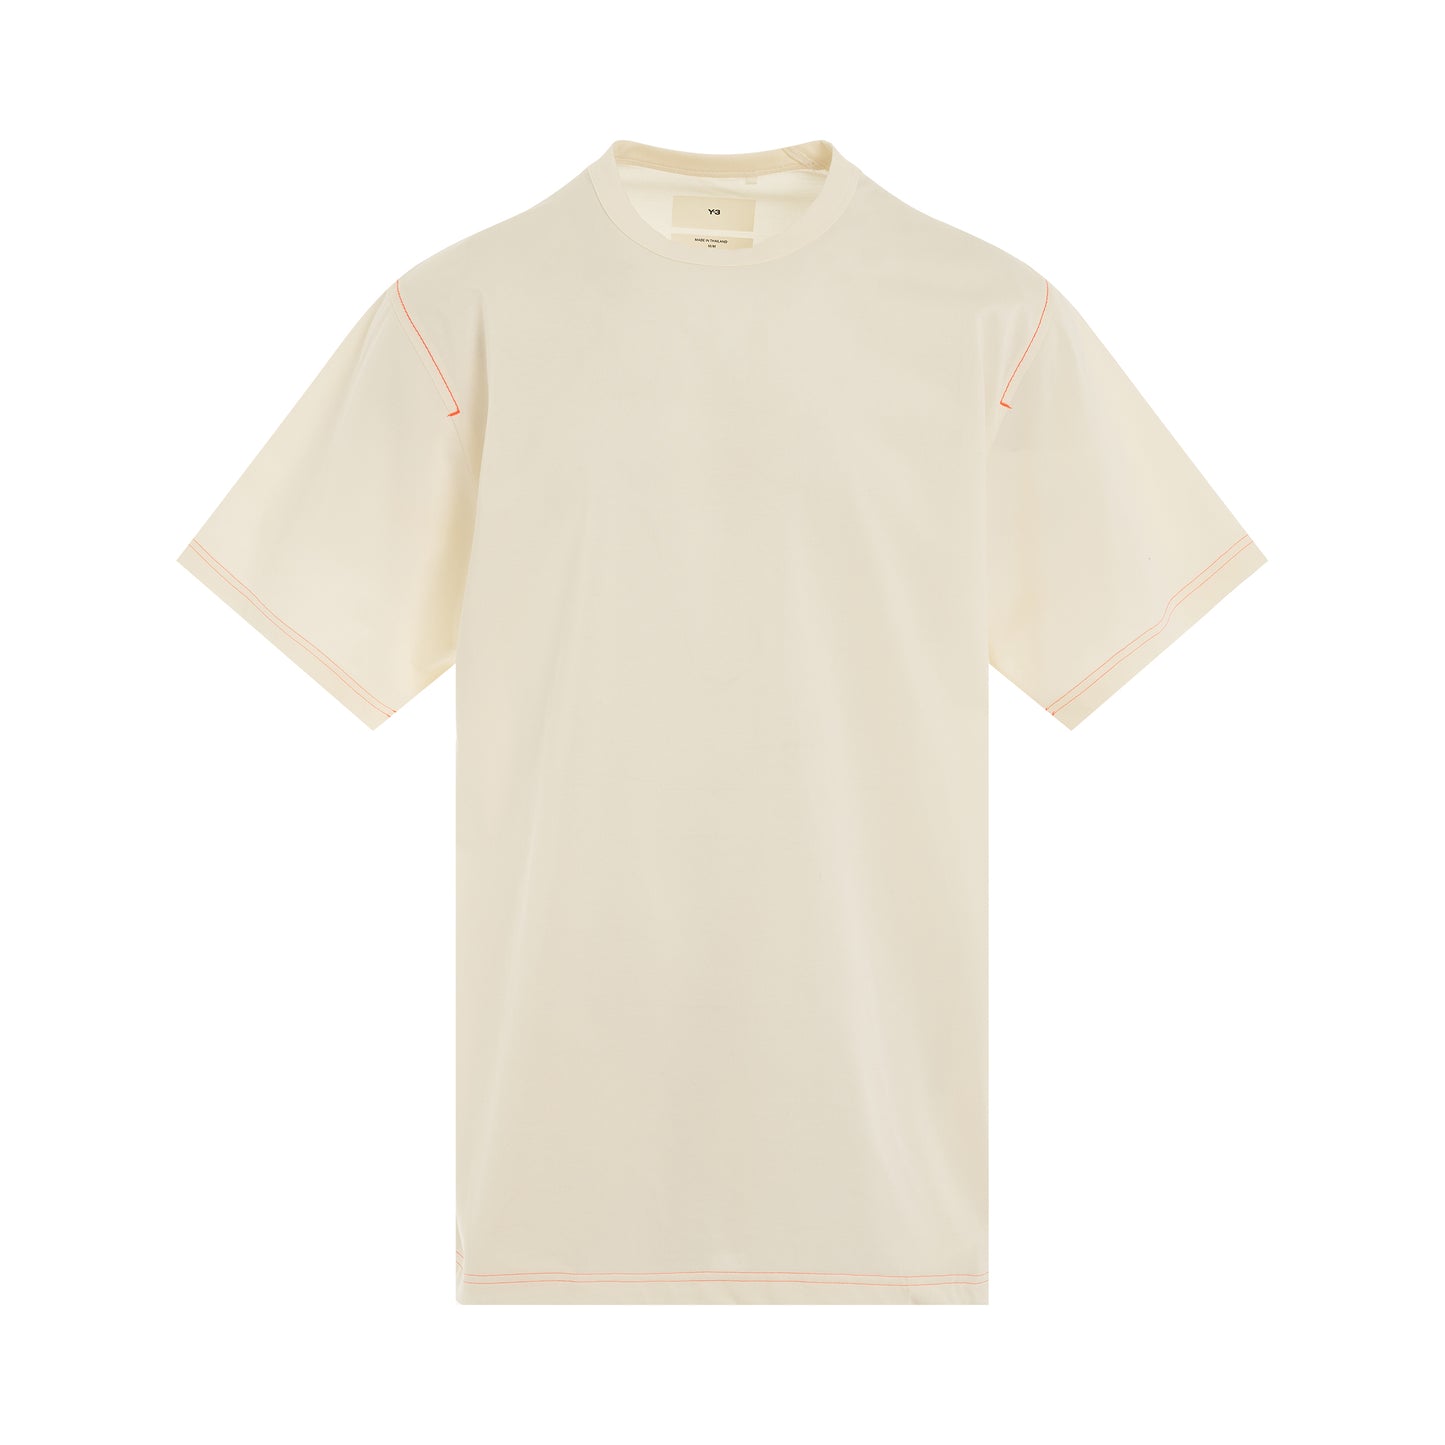 Premium Crewneck Short Sleeve T-Shirt in Cream White